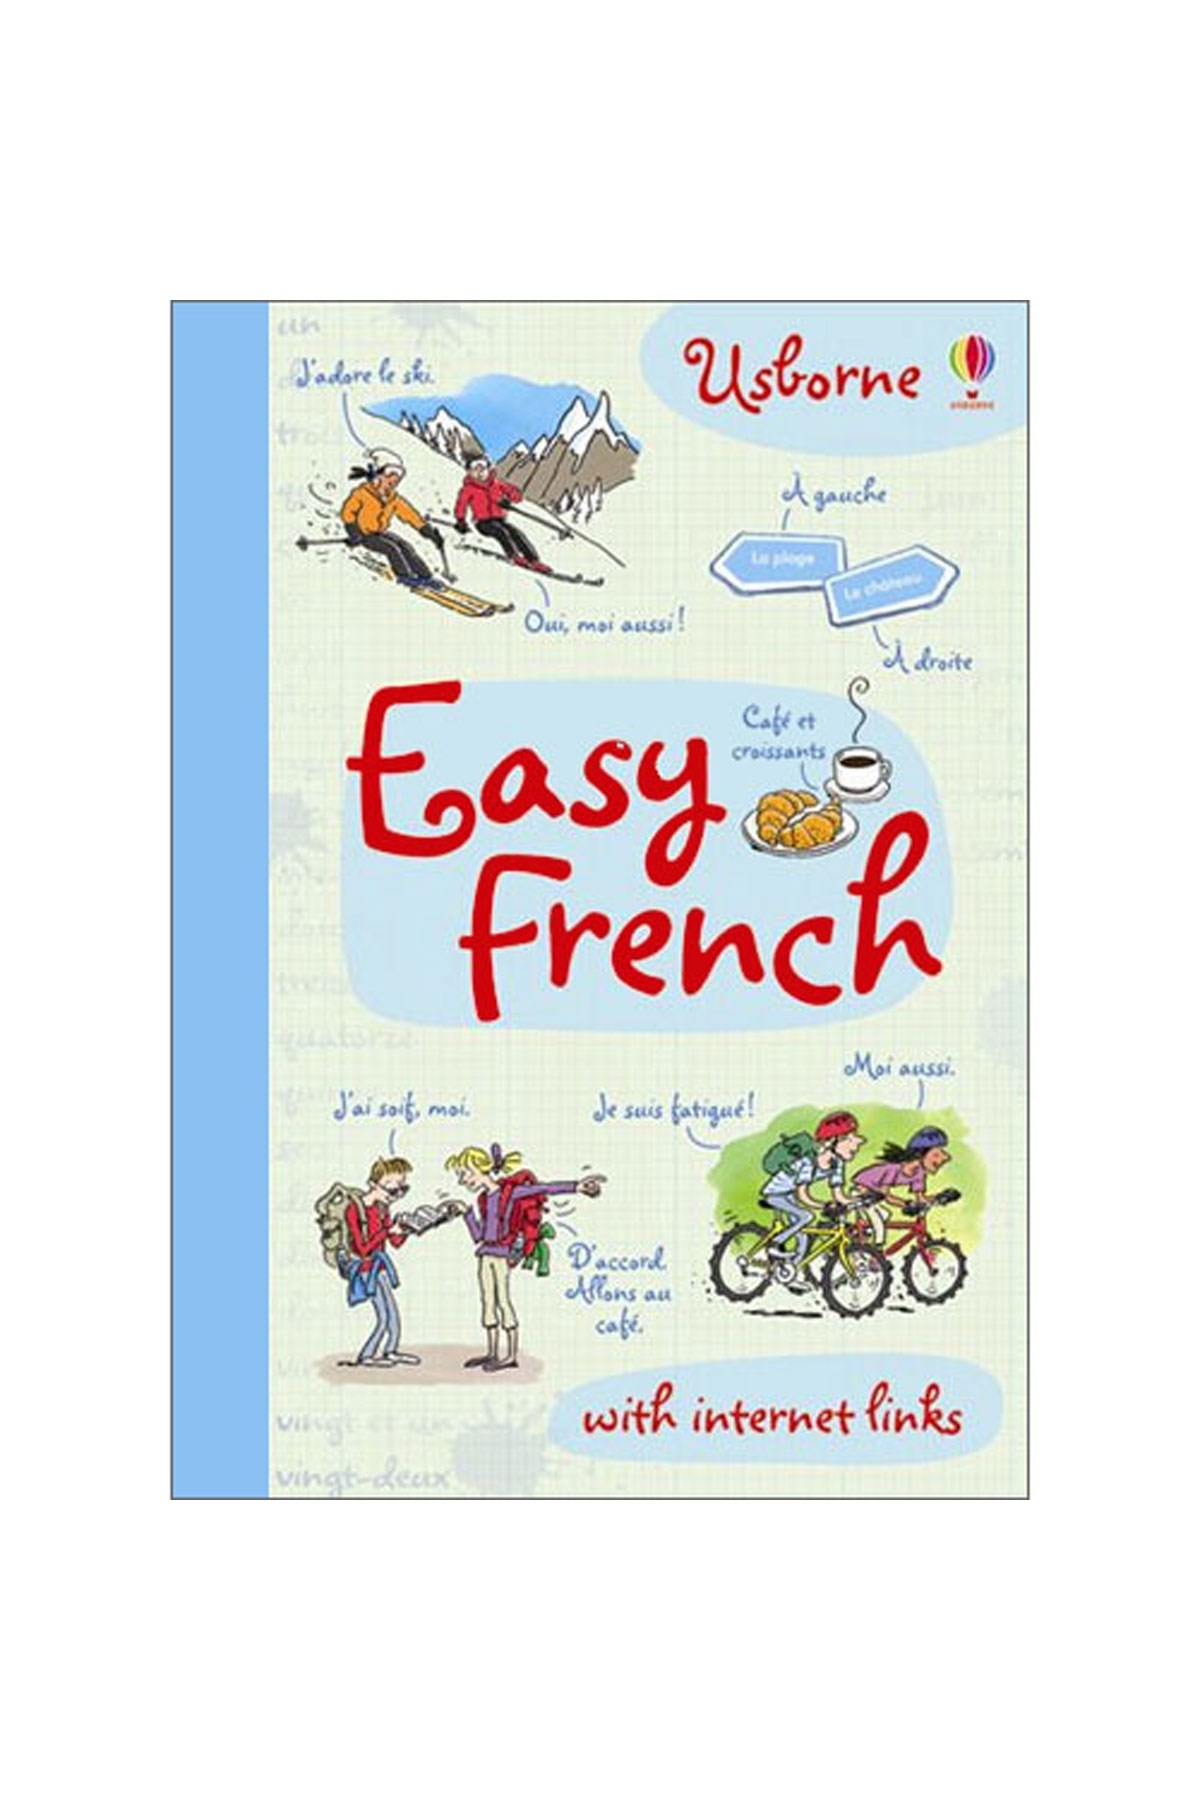 The Usborne Easy French